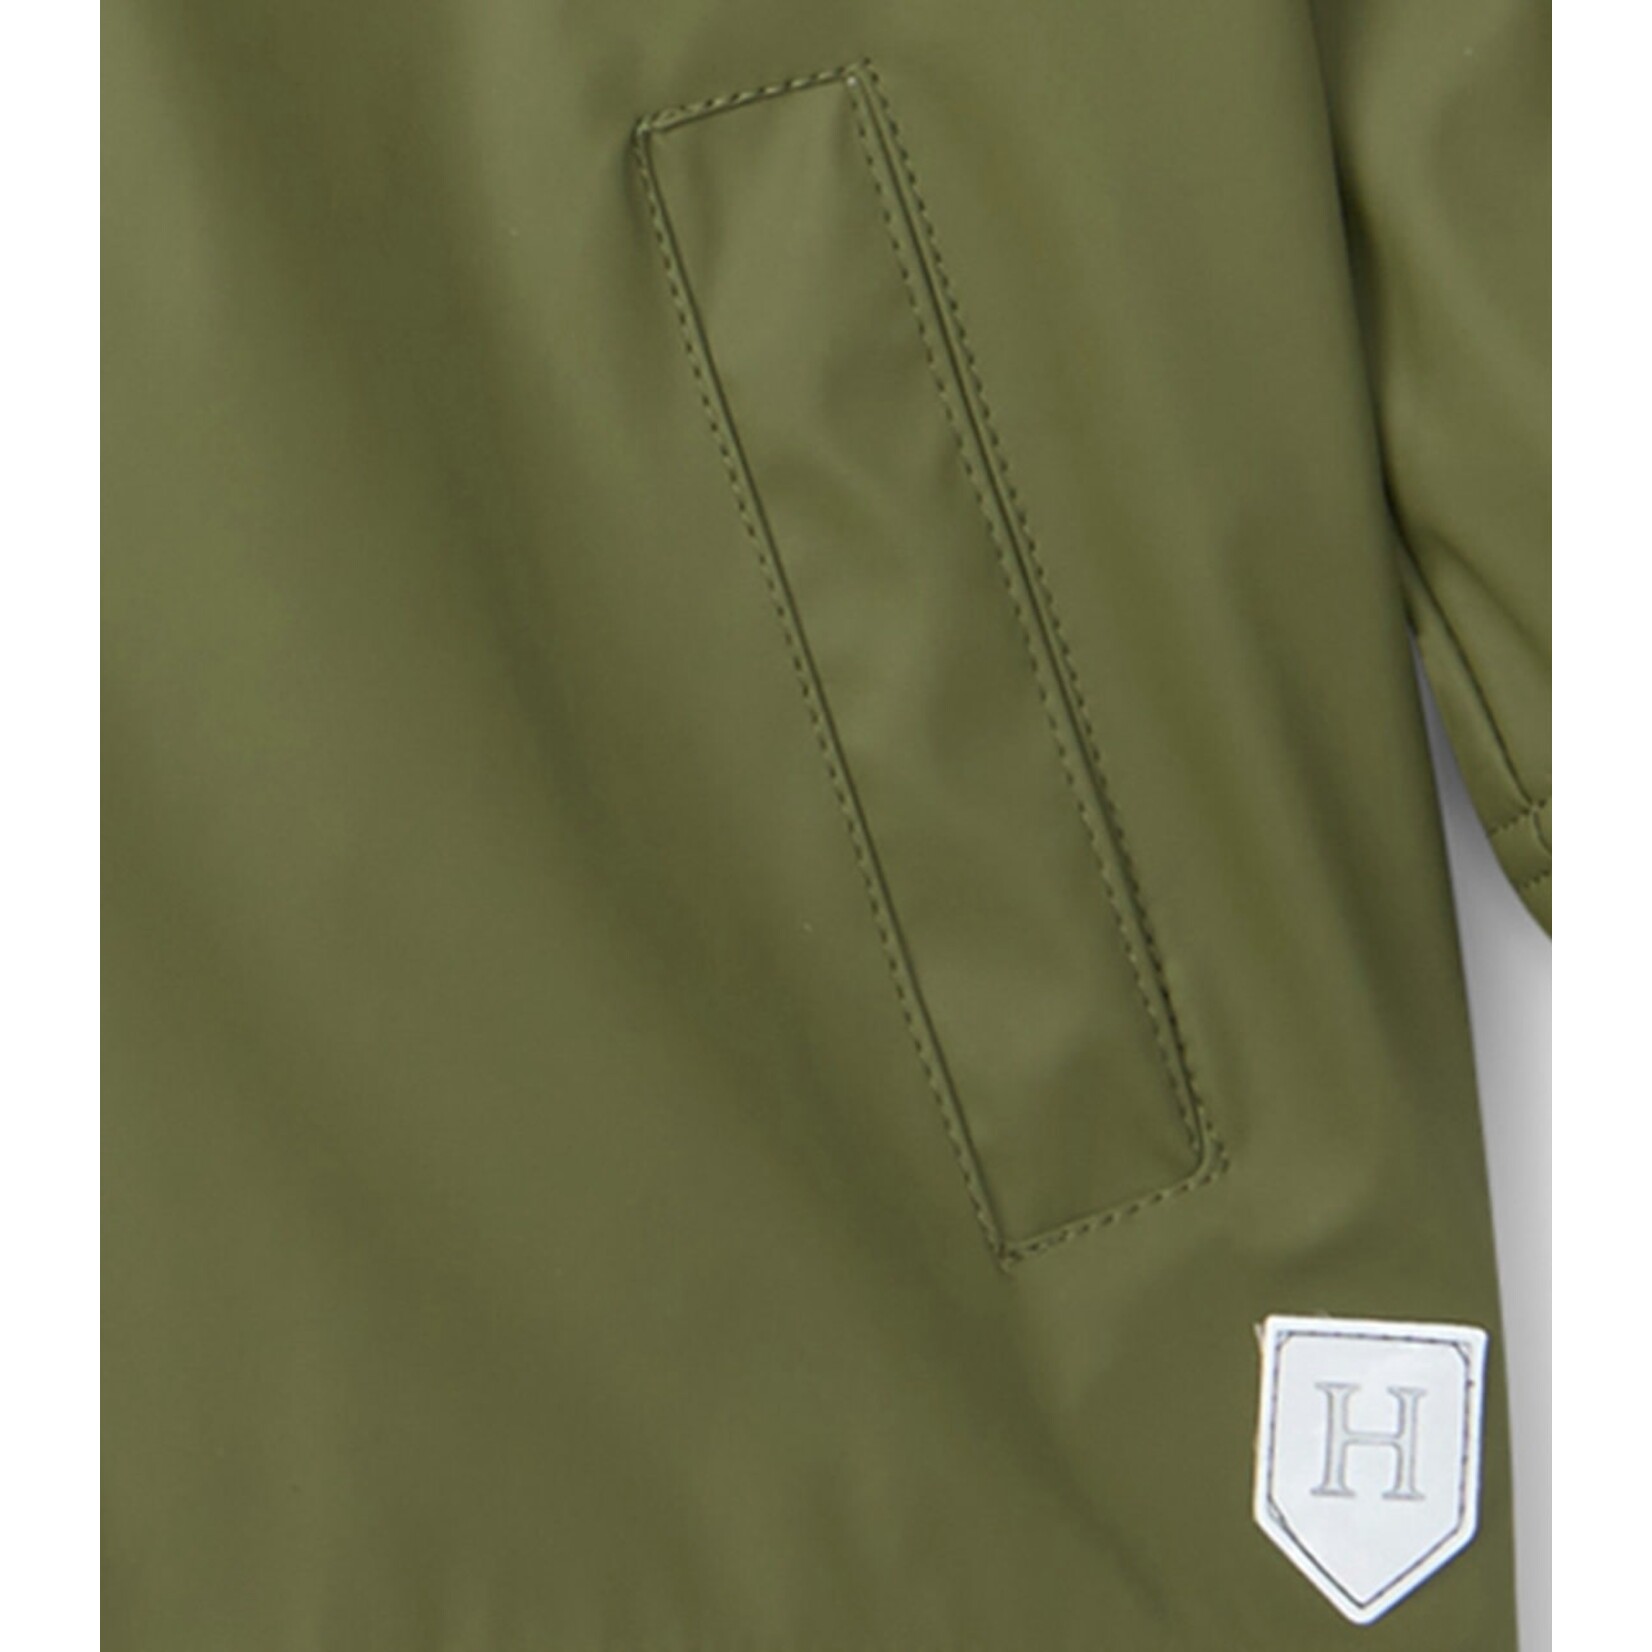 Hatley Hatley - Splash Jacket | Forest Green